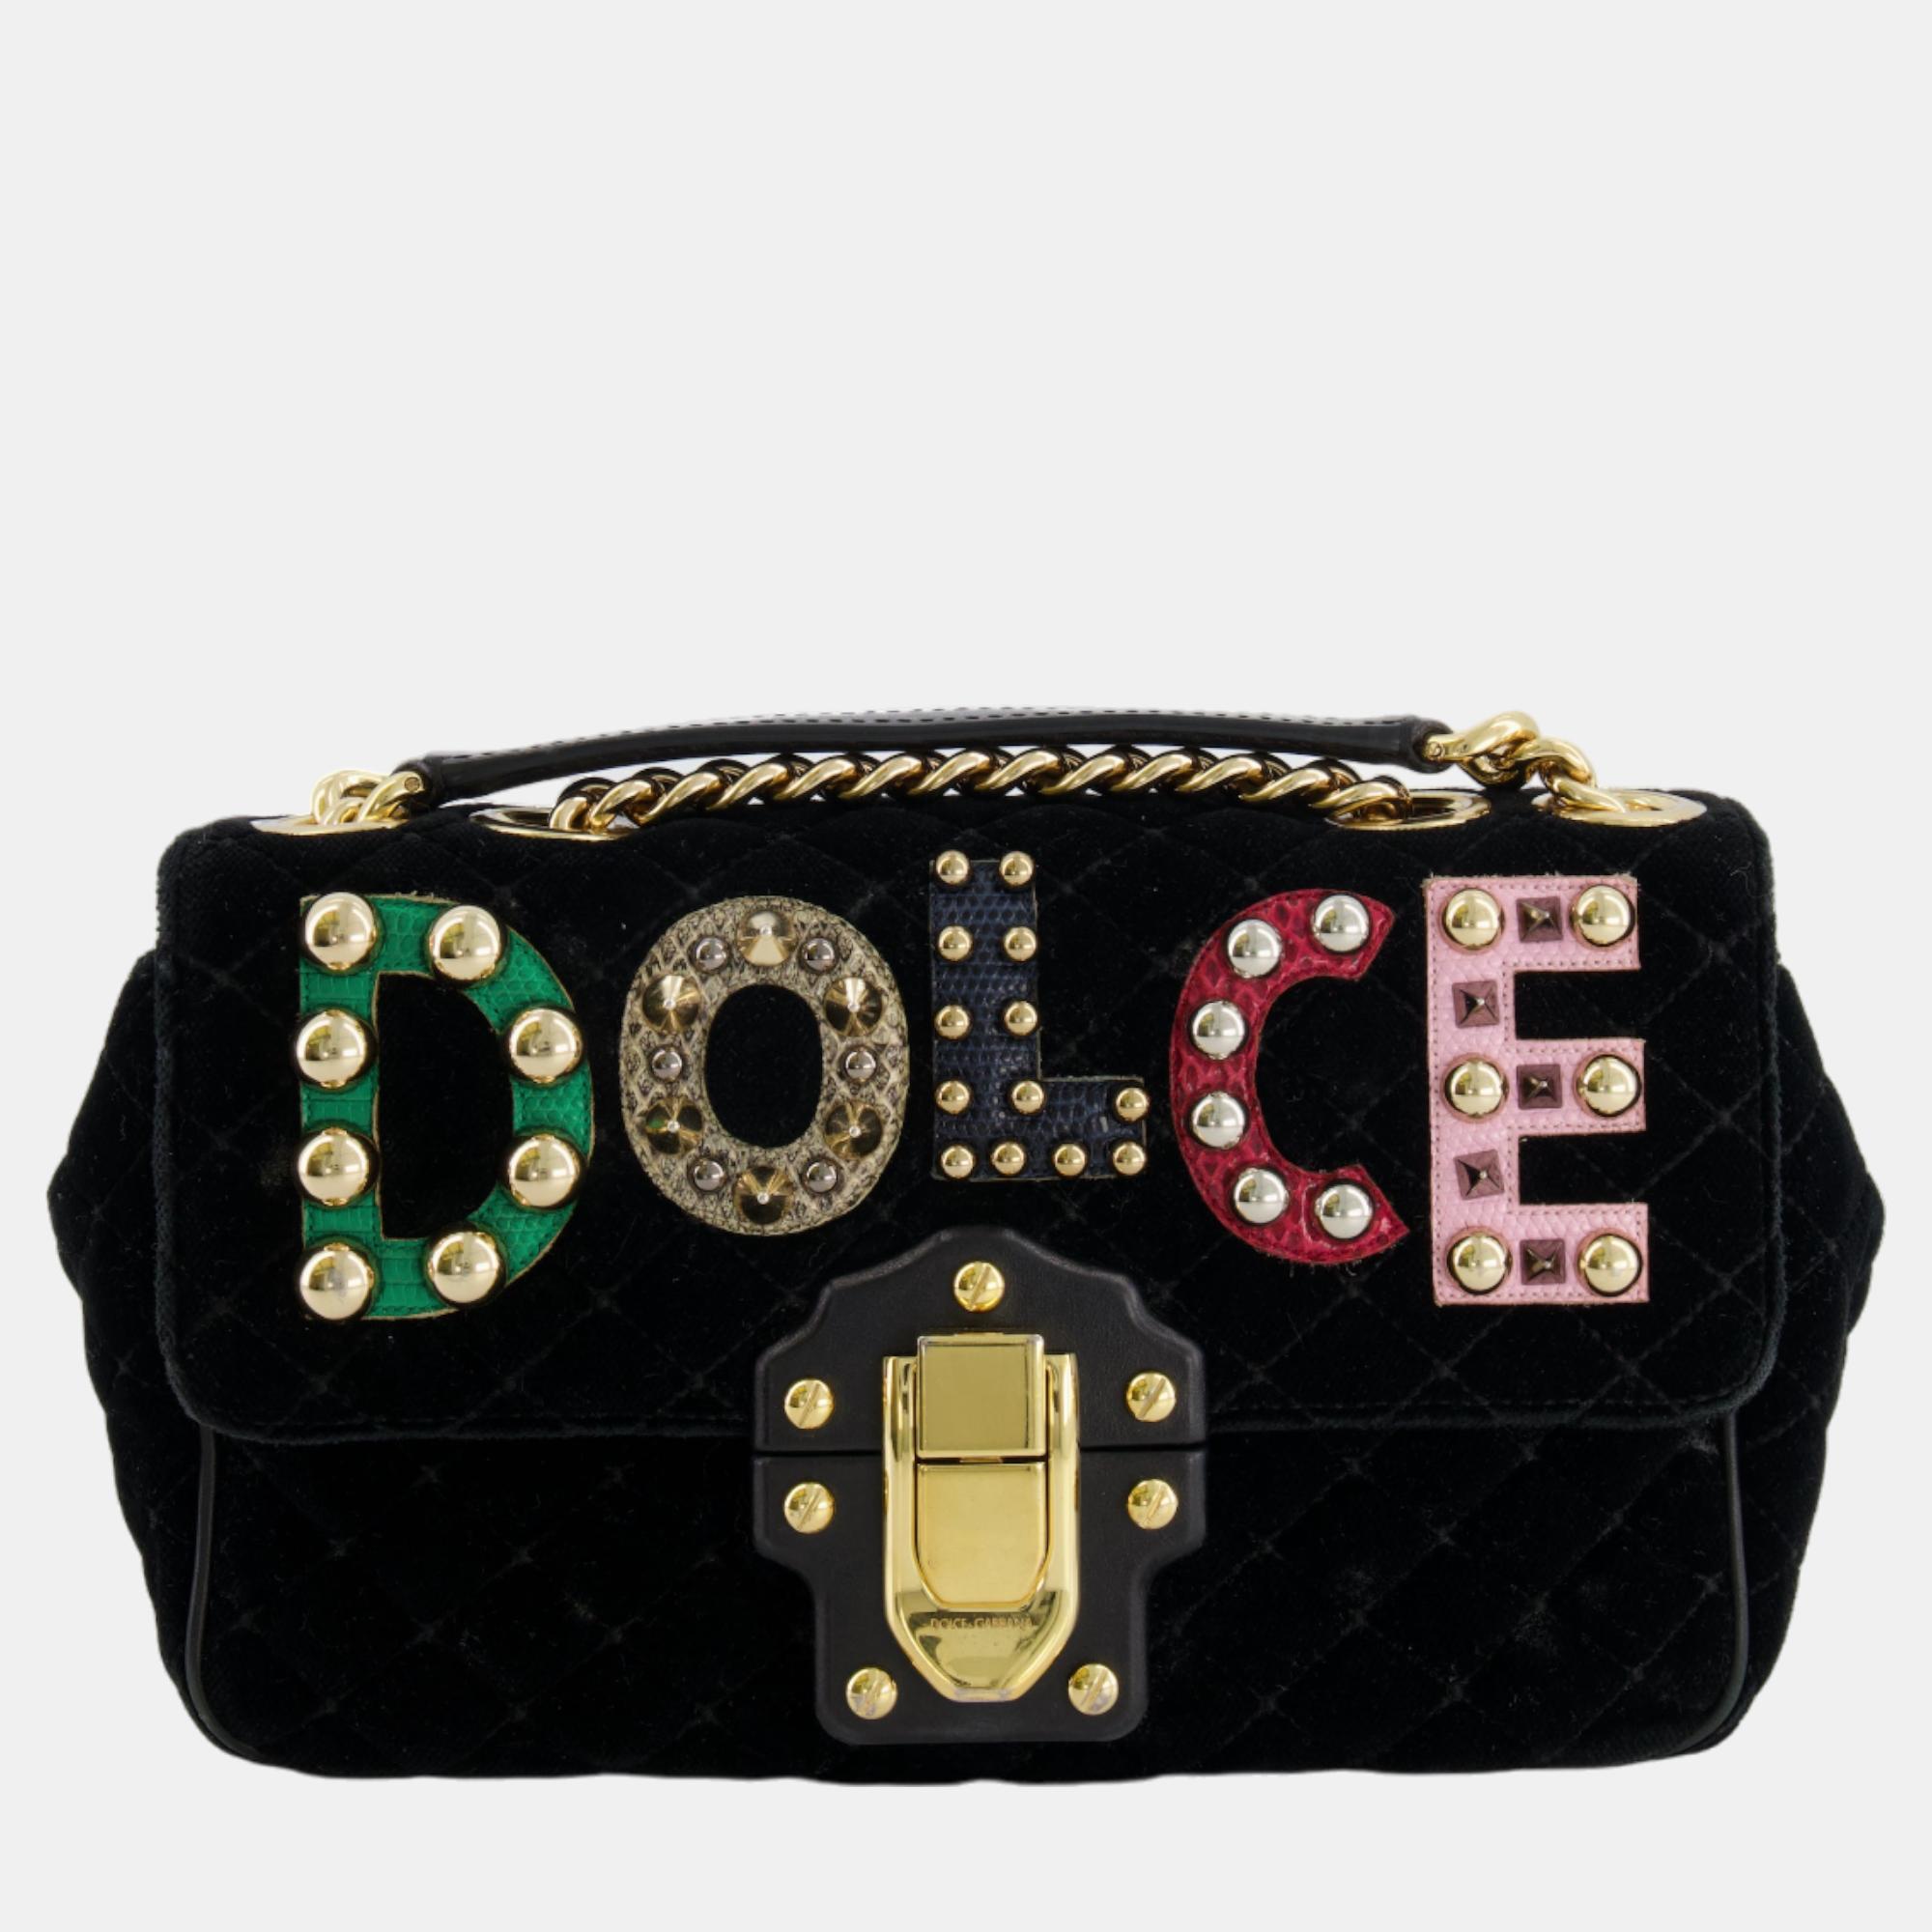 Dolce & gabbana black velvet lucia bag with embellishments and gold hardware